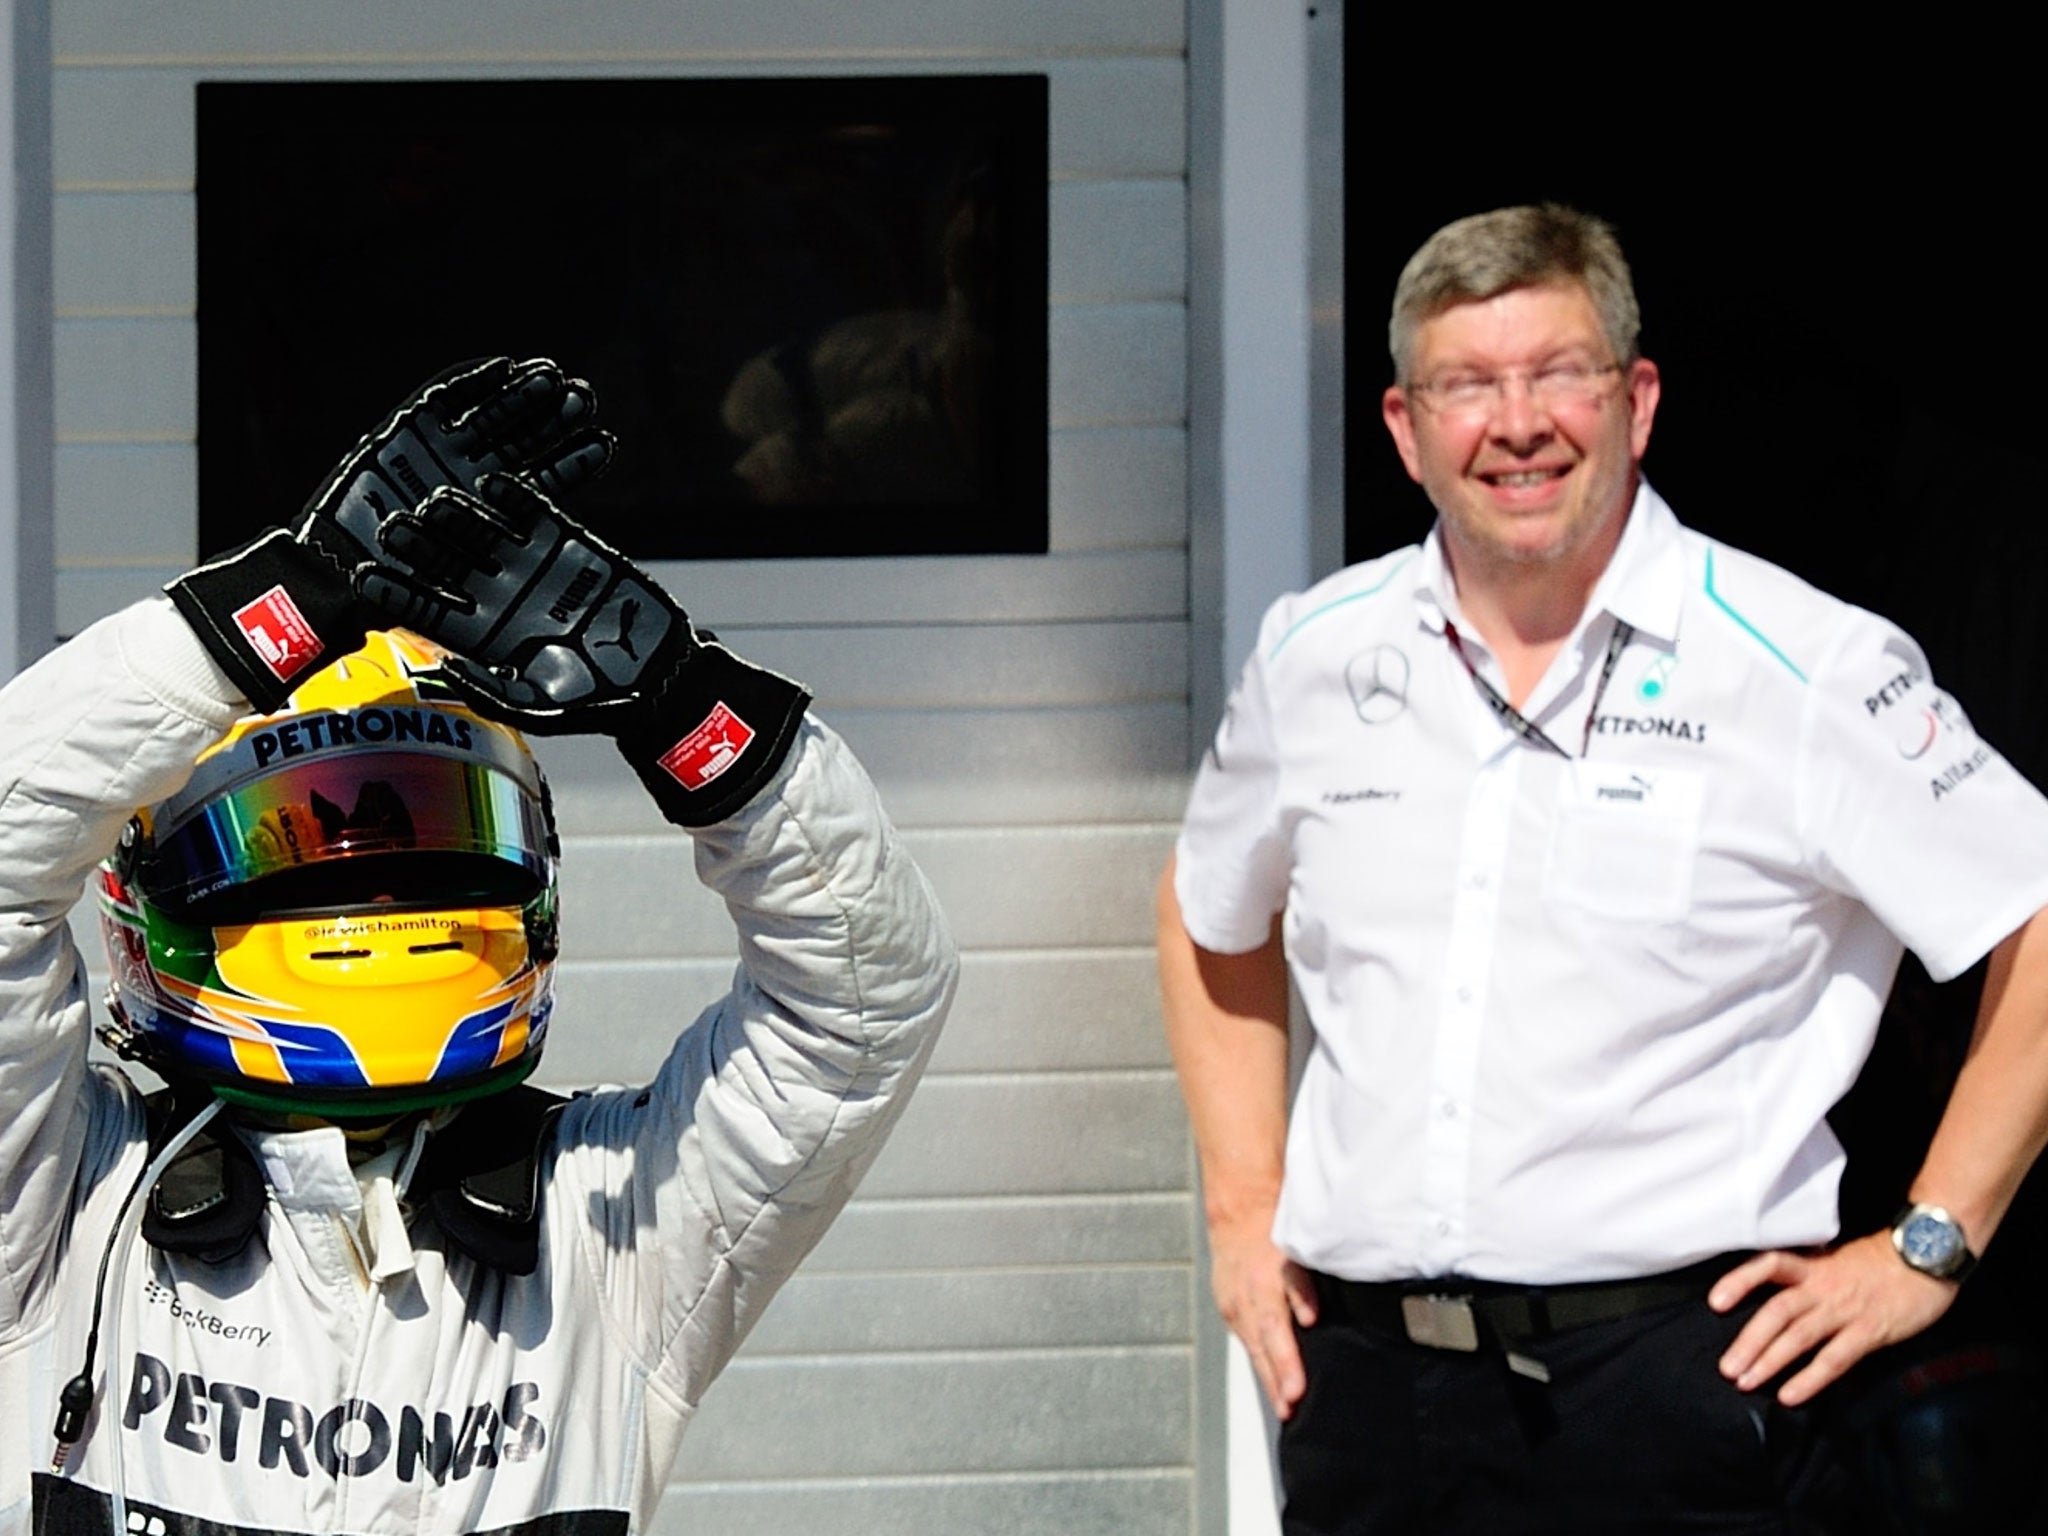 Brawn worked at Mercedes as team principal alongside 2017 championship favourite Hamilton